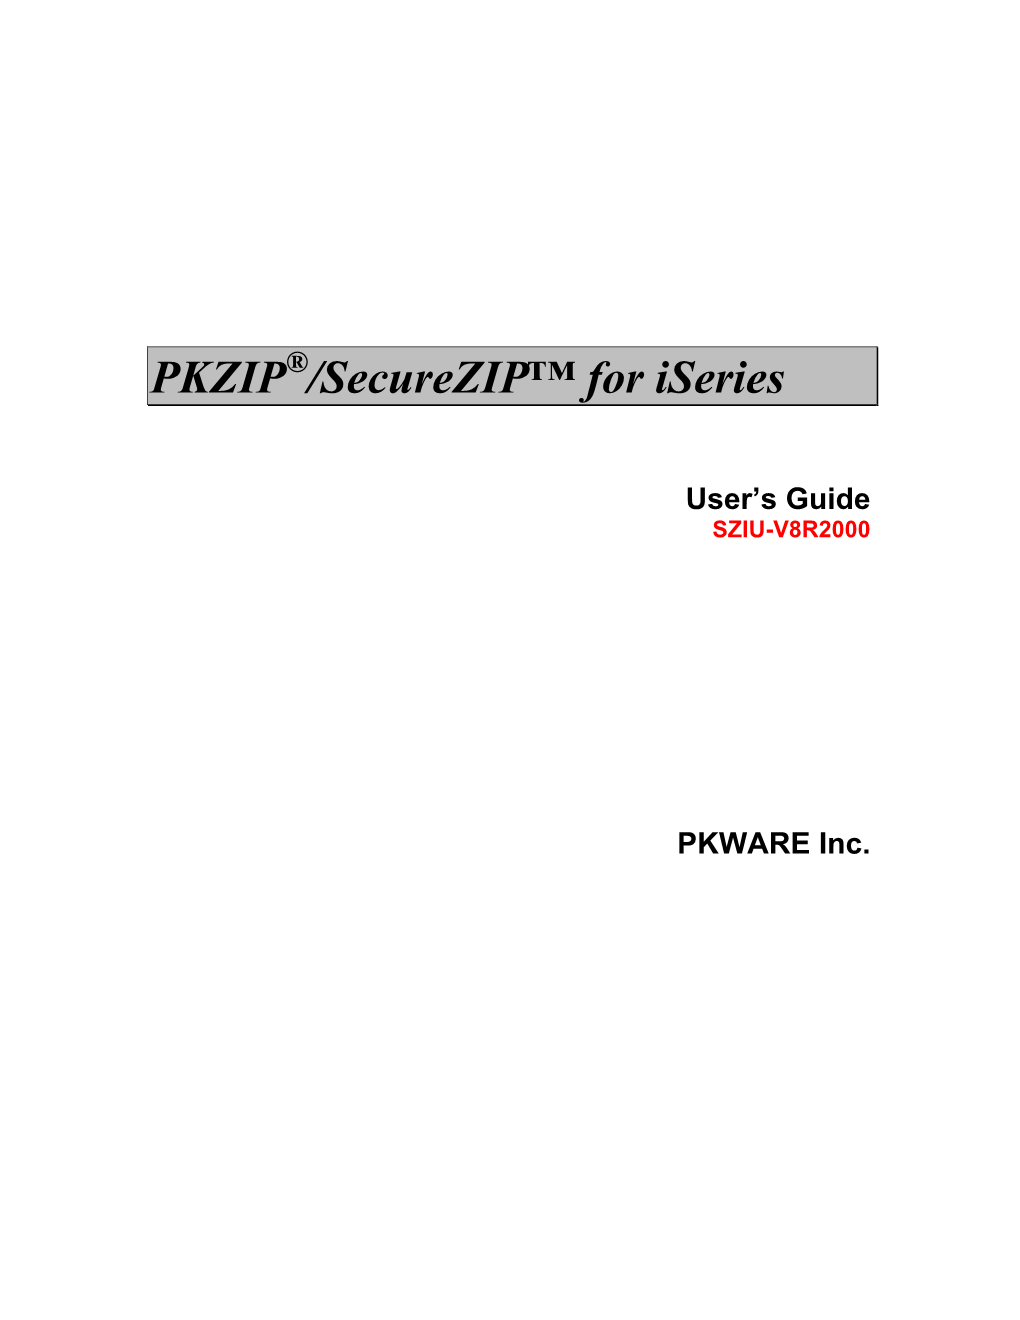 PKZIP /Securezip™ for Iseries